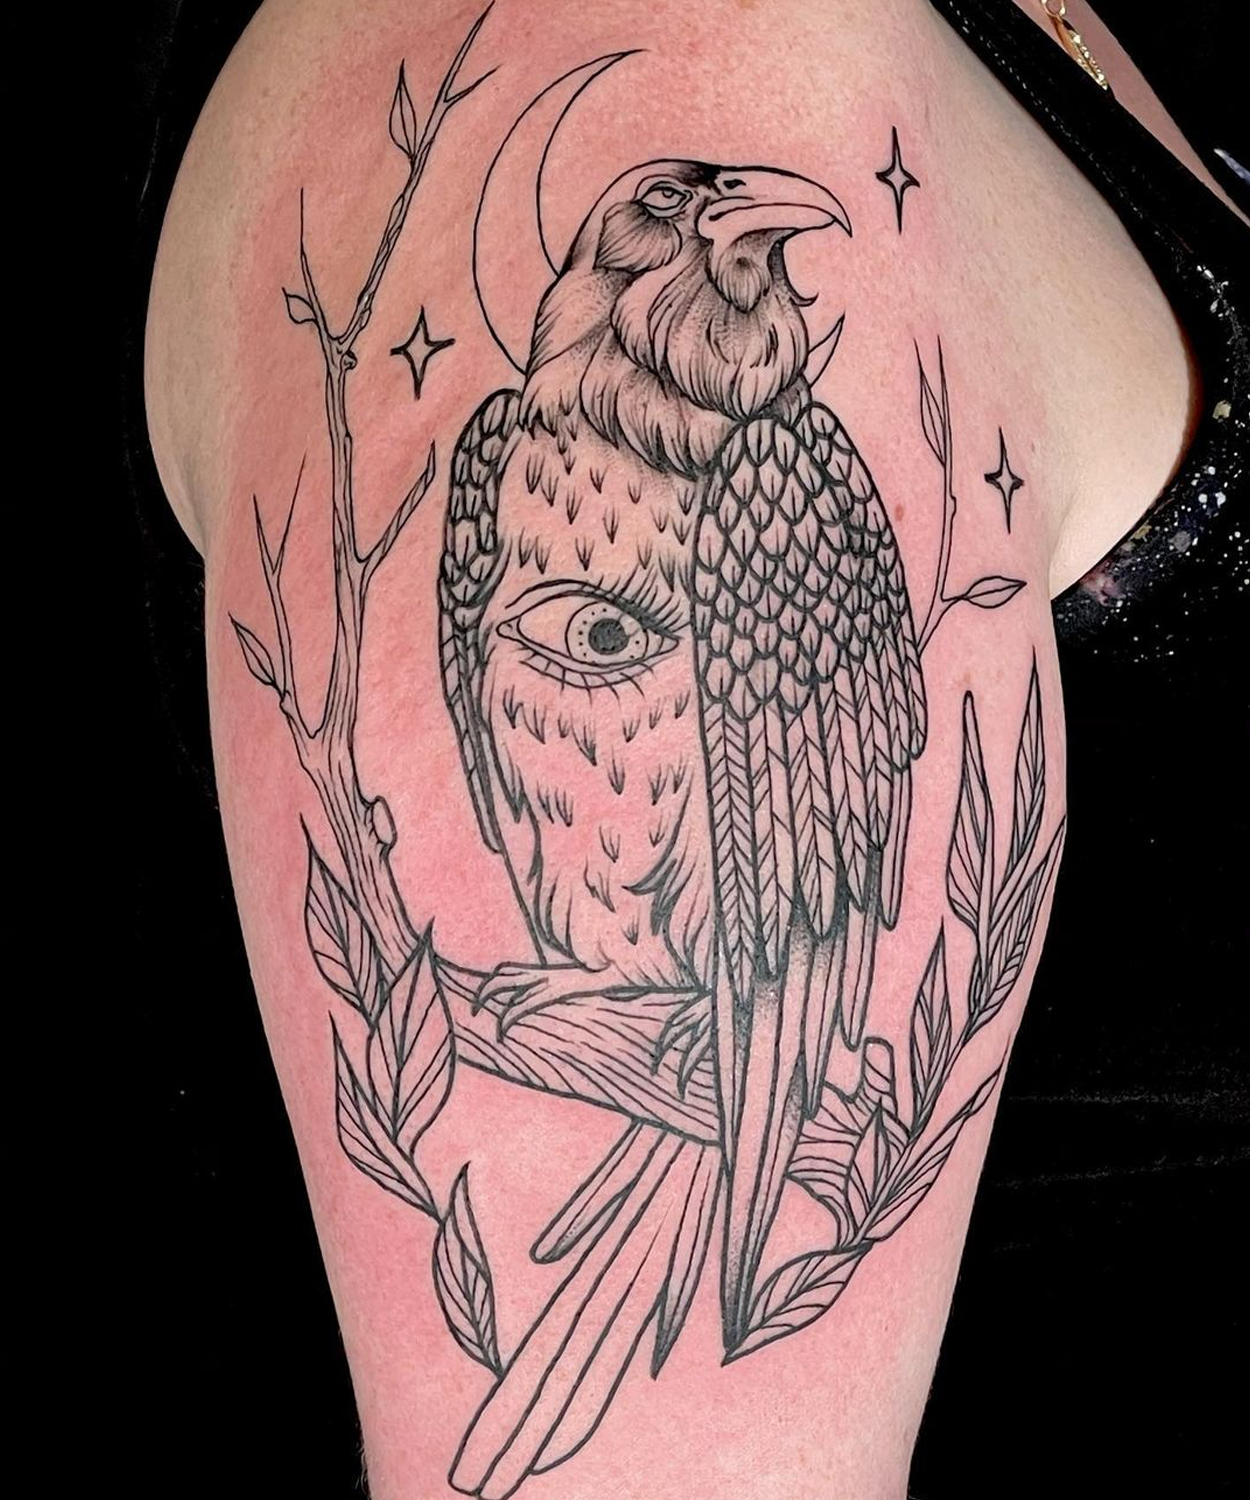 tatuagem de corvo grande